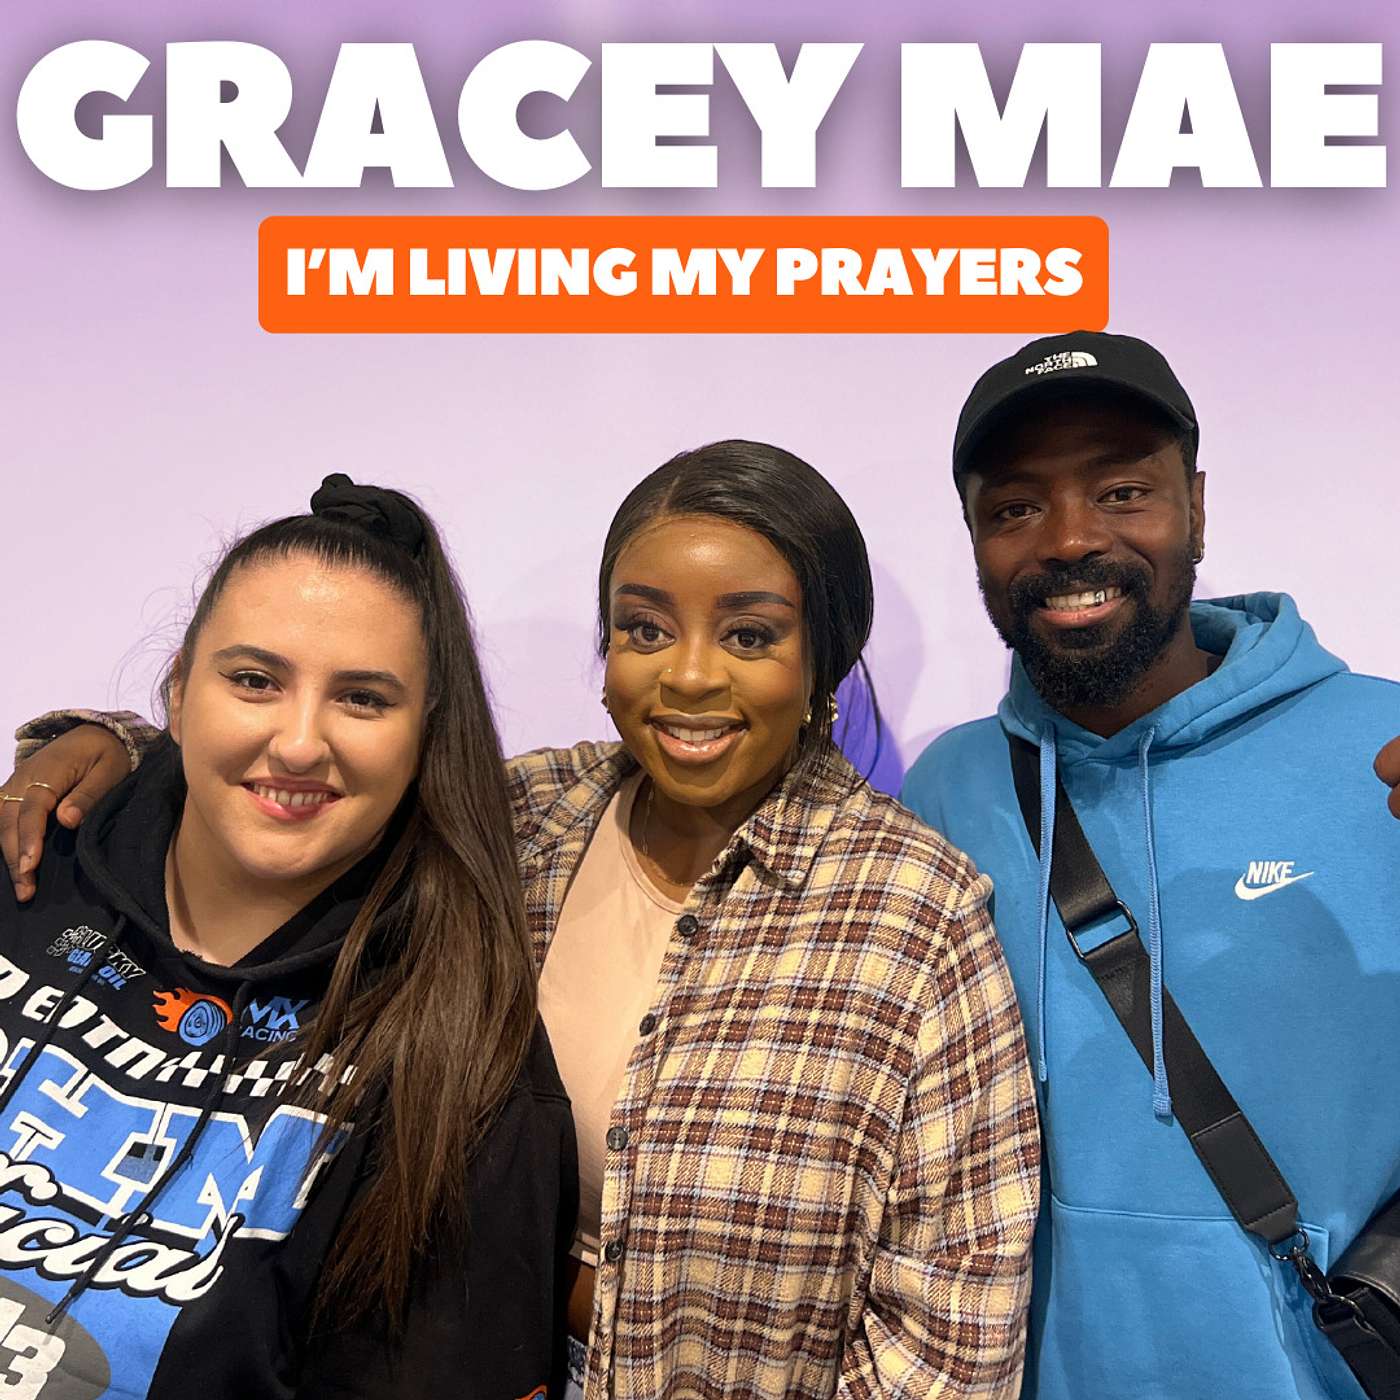 I’m Living My Prayers ft. Gracey Mae